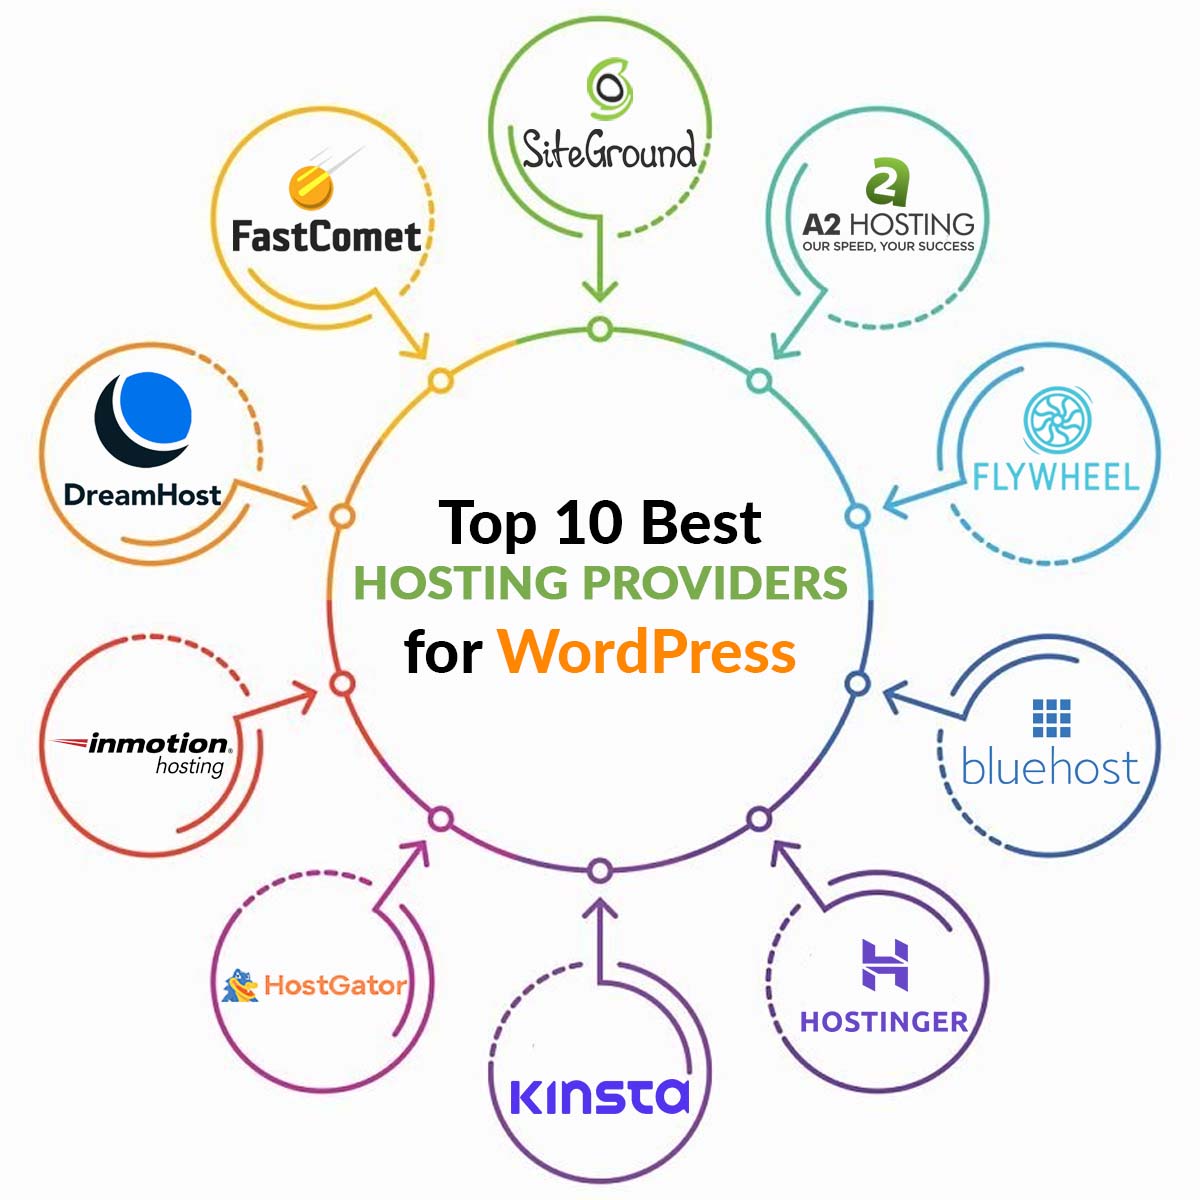 Top 10 Best Hosting Providers for WordPress